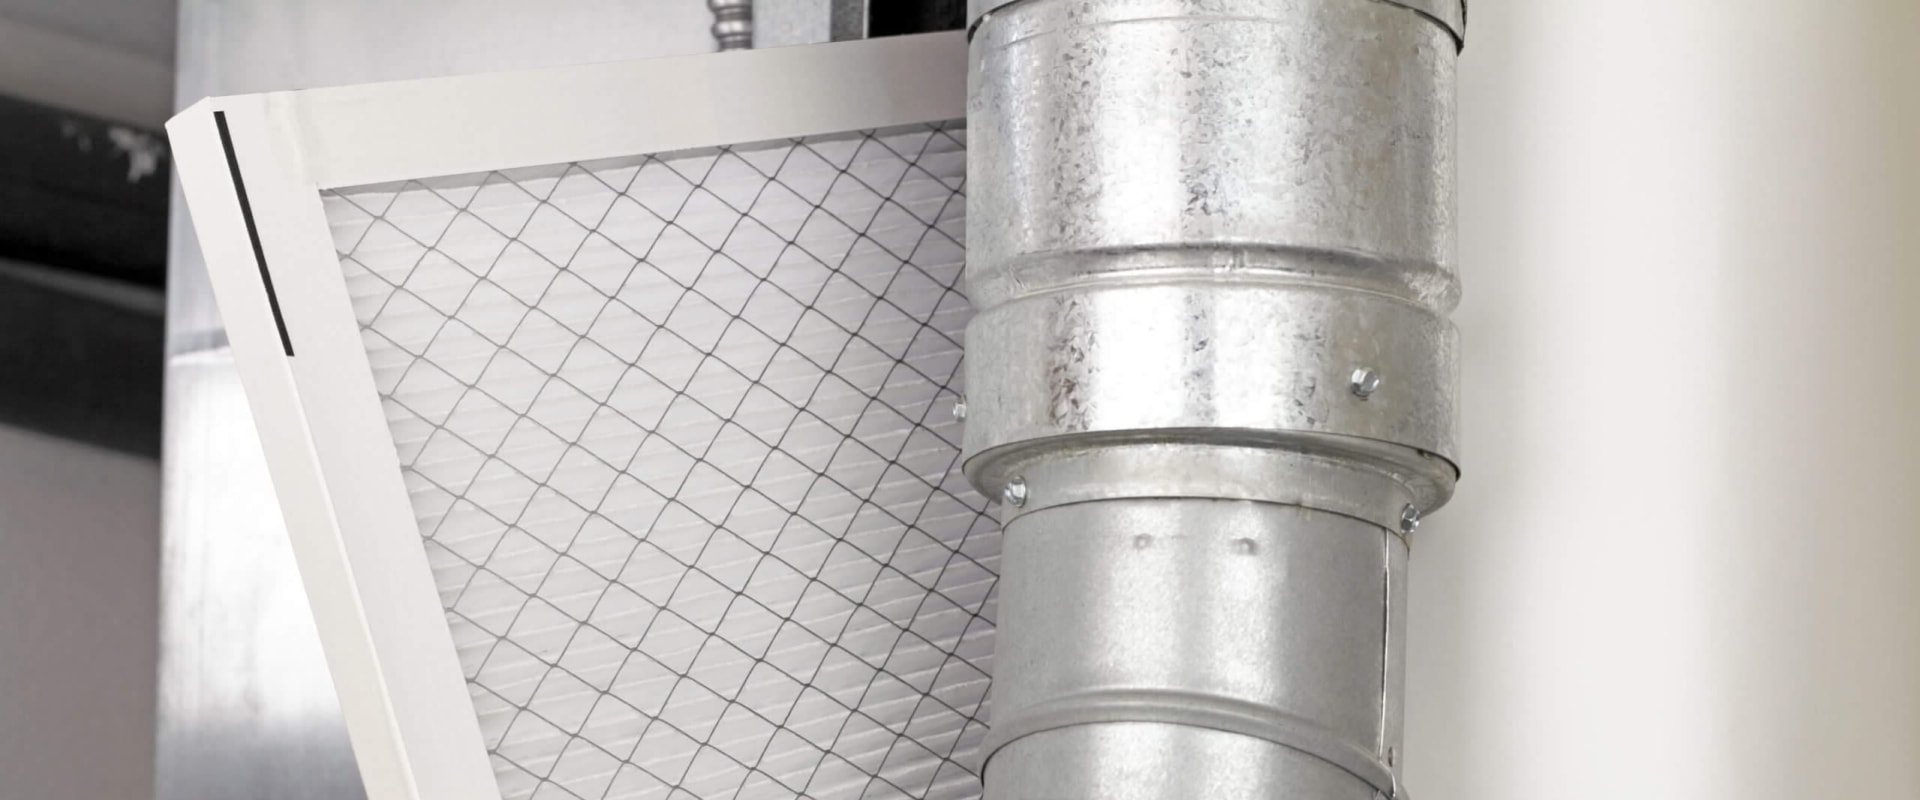 Discover the Best MERV 11 Furnace HVAC Air Filters Near You